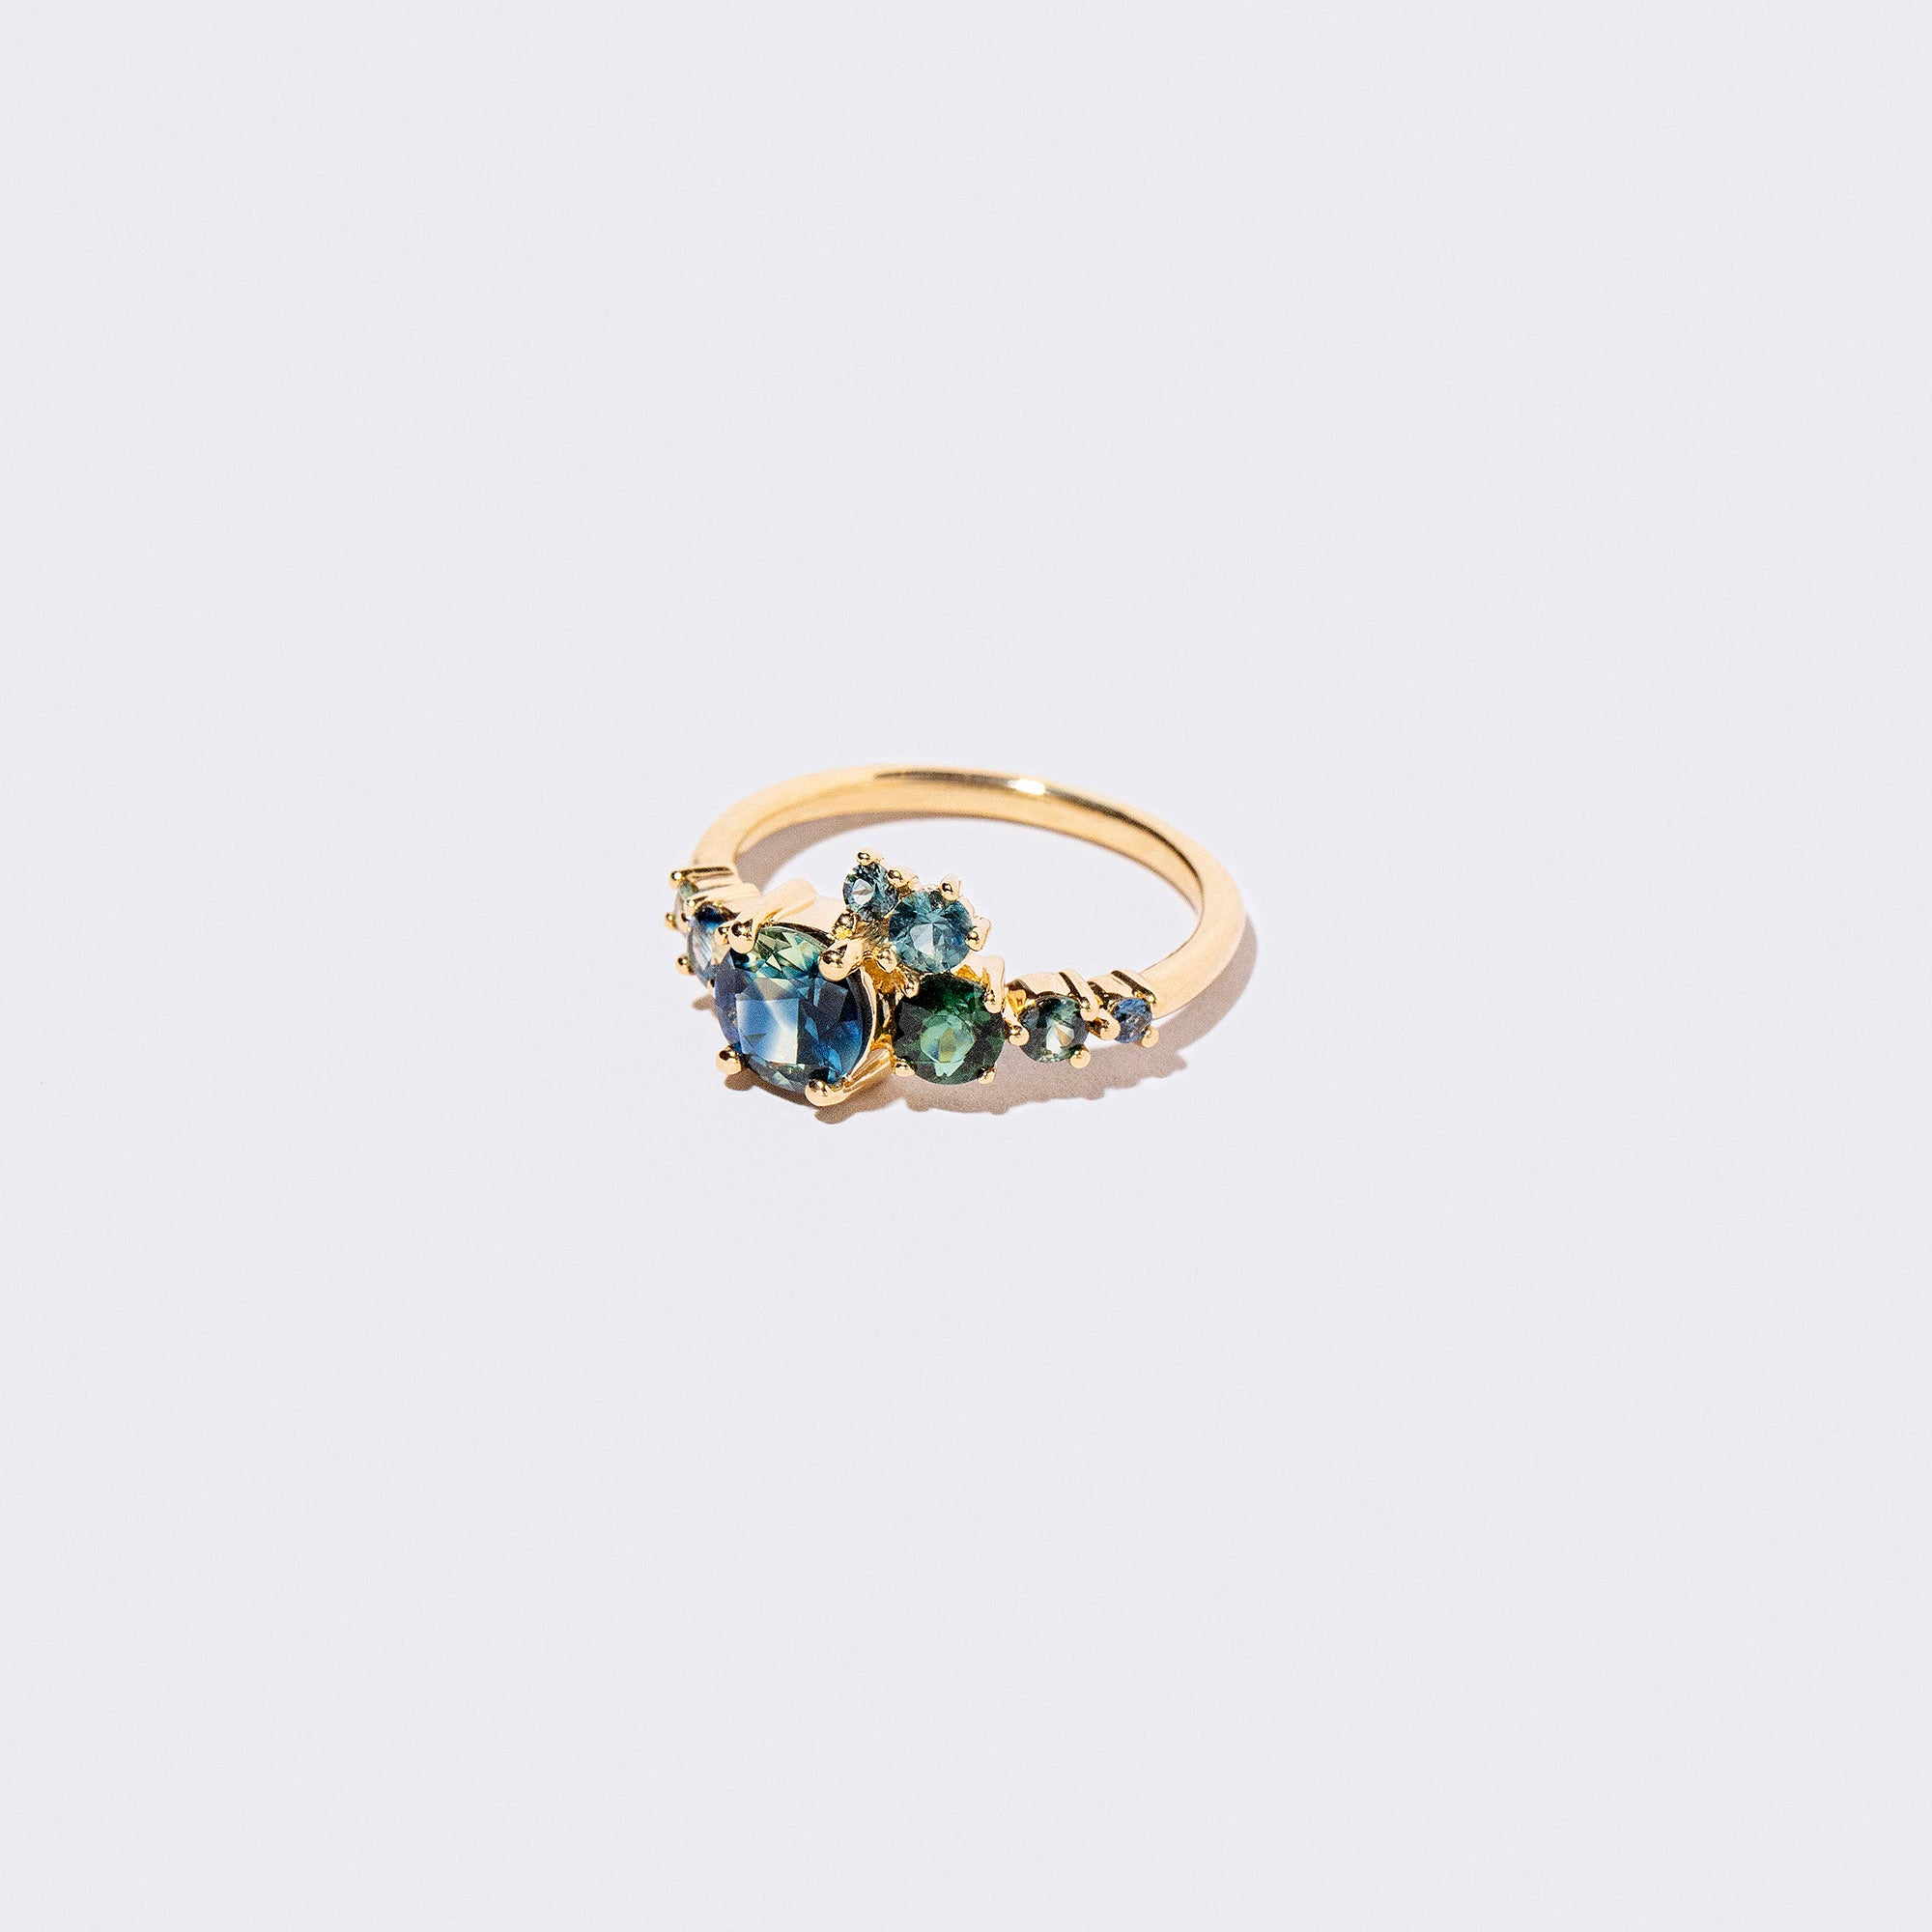 product_details:: Luna Ring - Bicolor Sapphire on light color background.